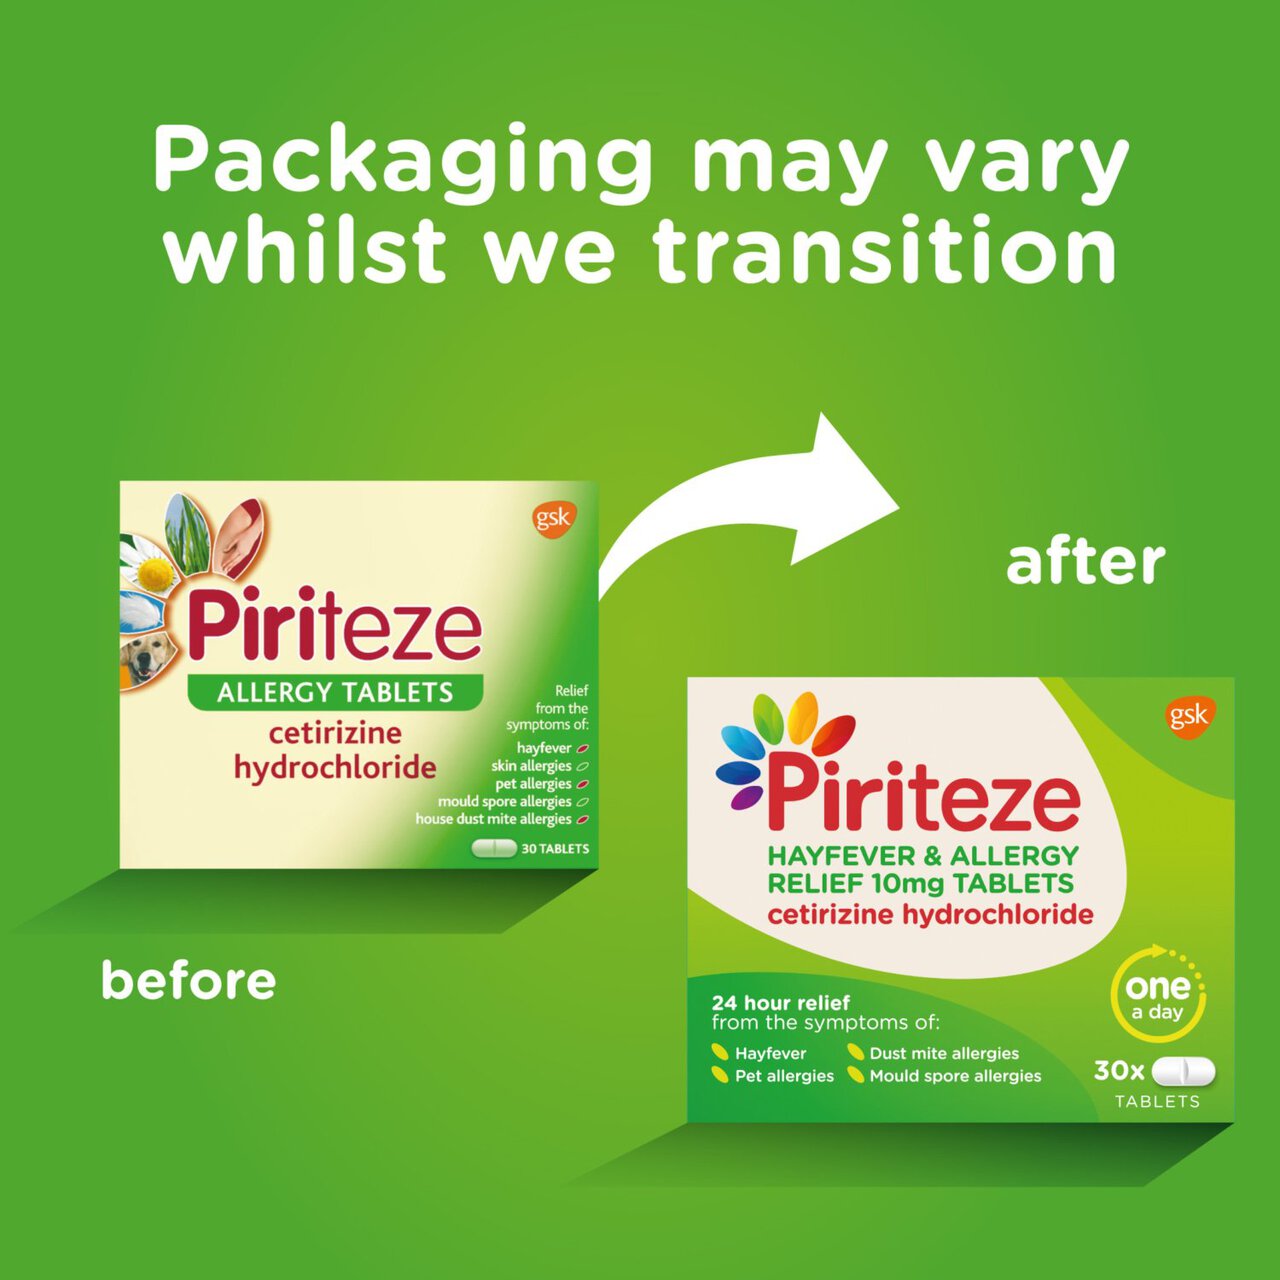 Piriteze Hayfever & Allergy Relief Antihistamine Cetirizine 14 Tablets 14 per pack